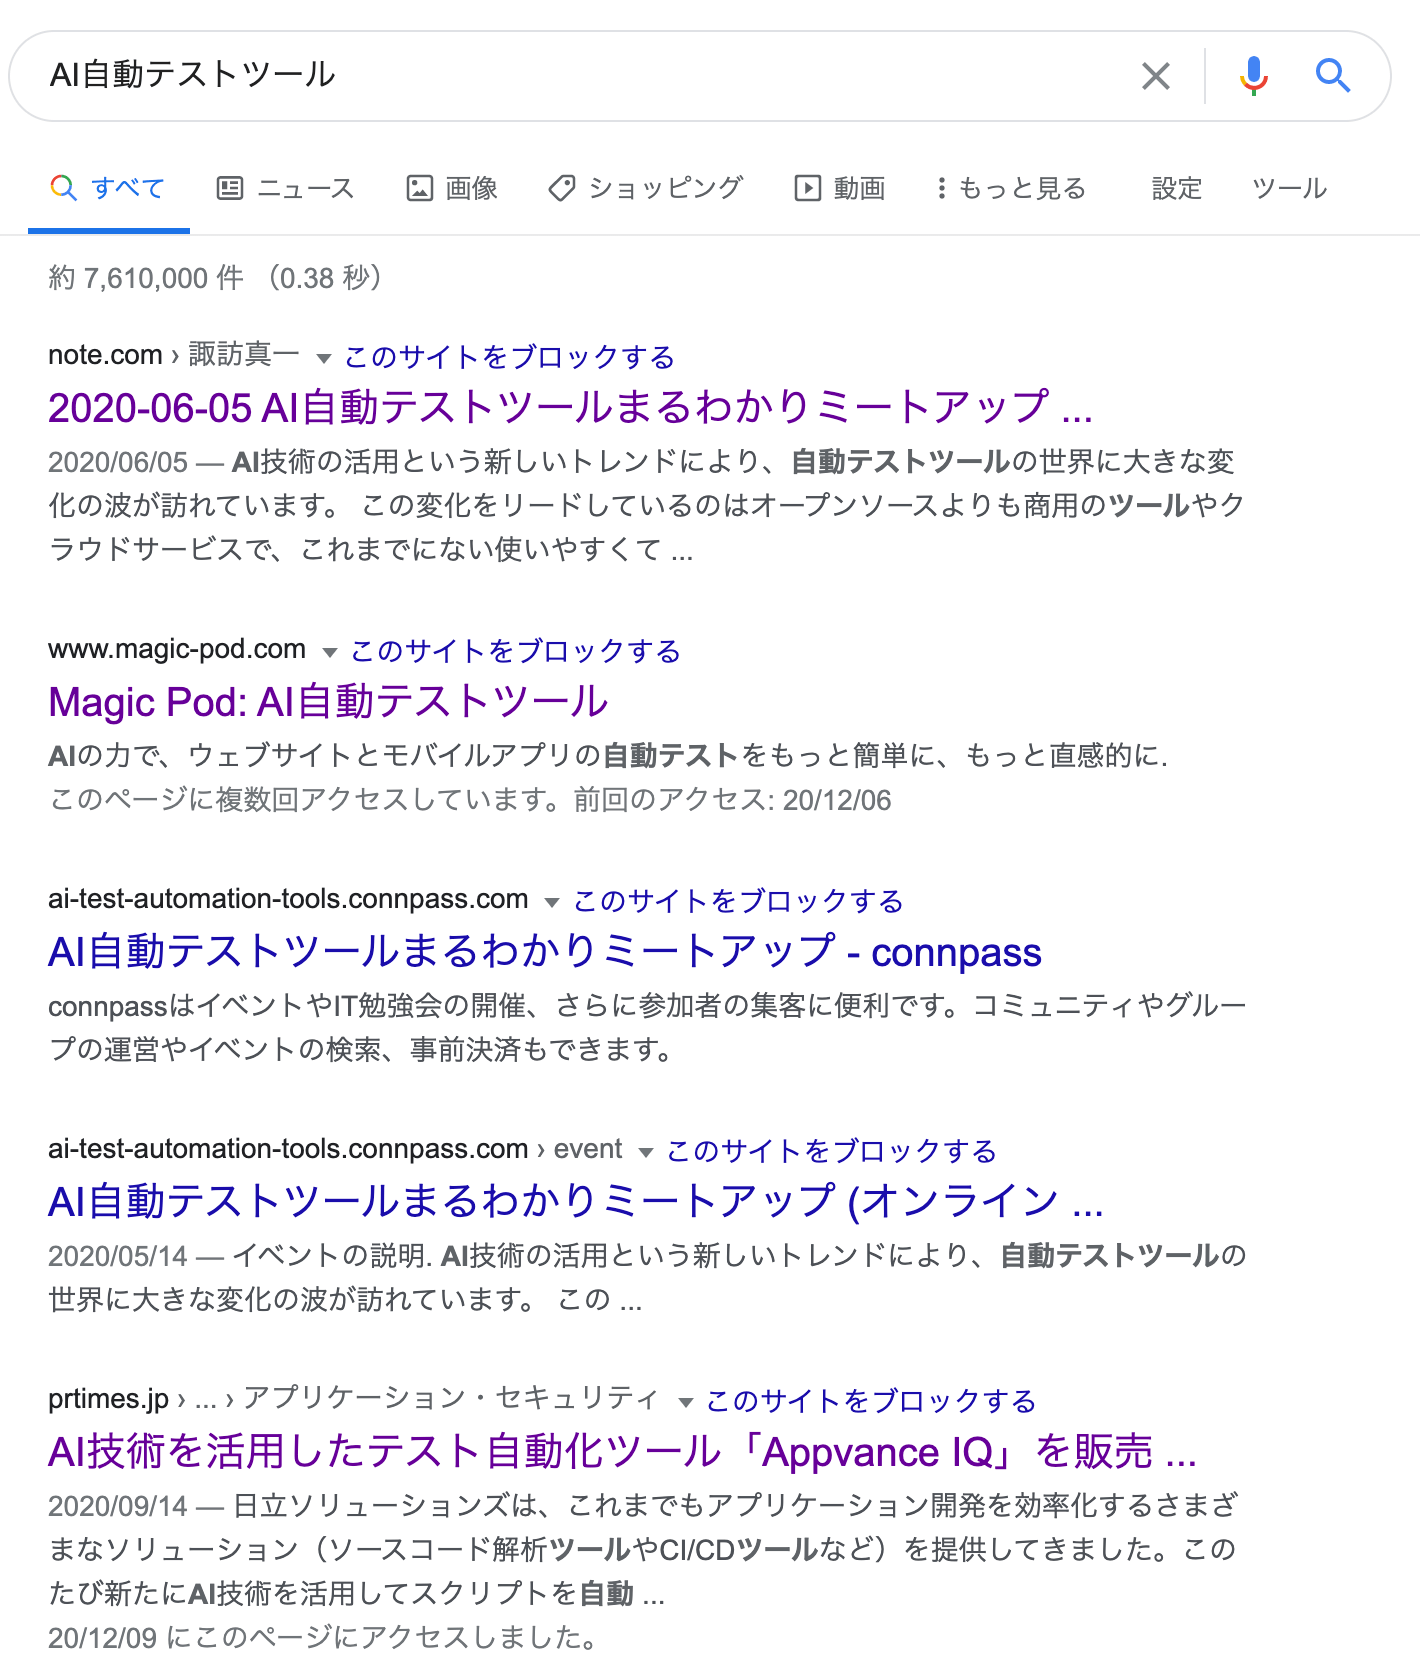 google-result